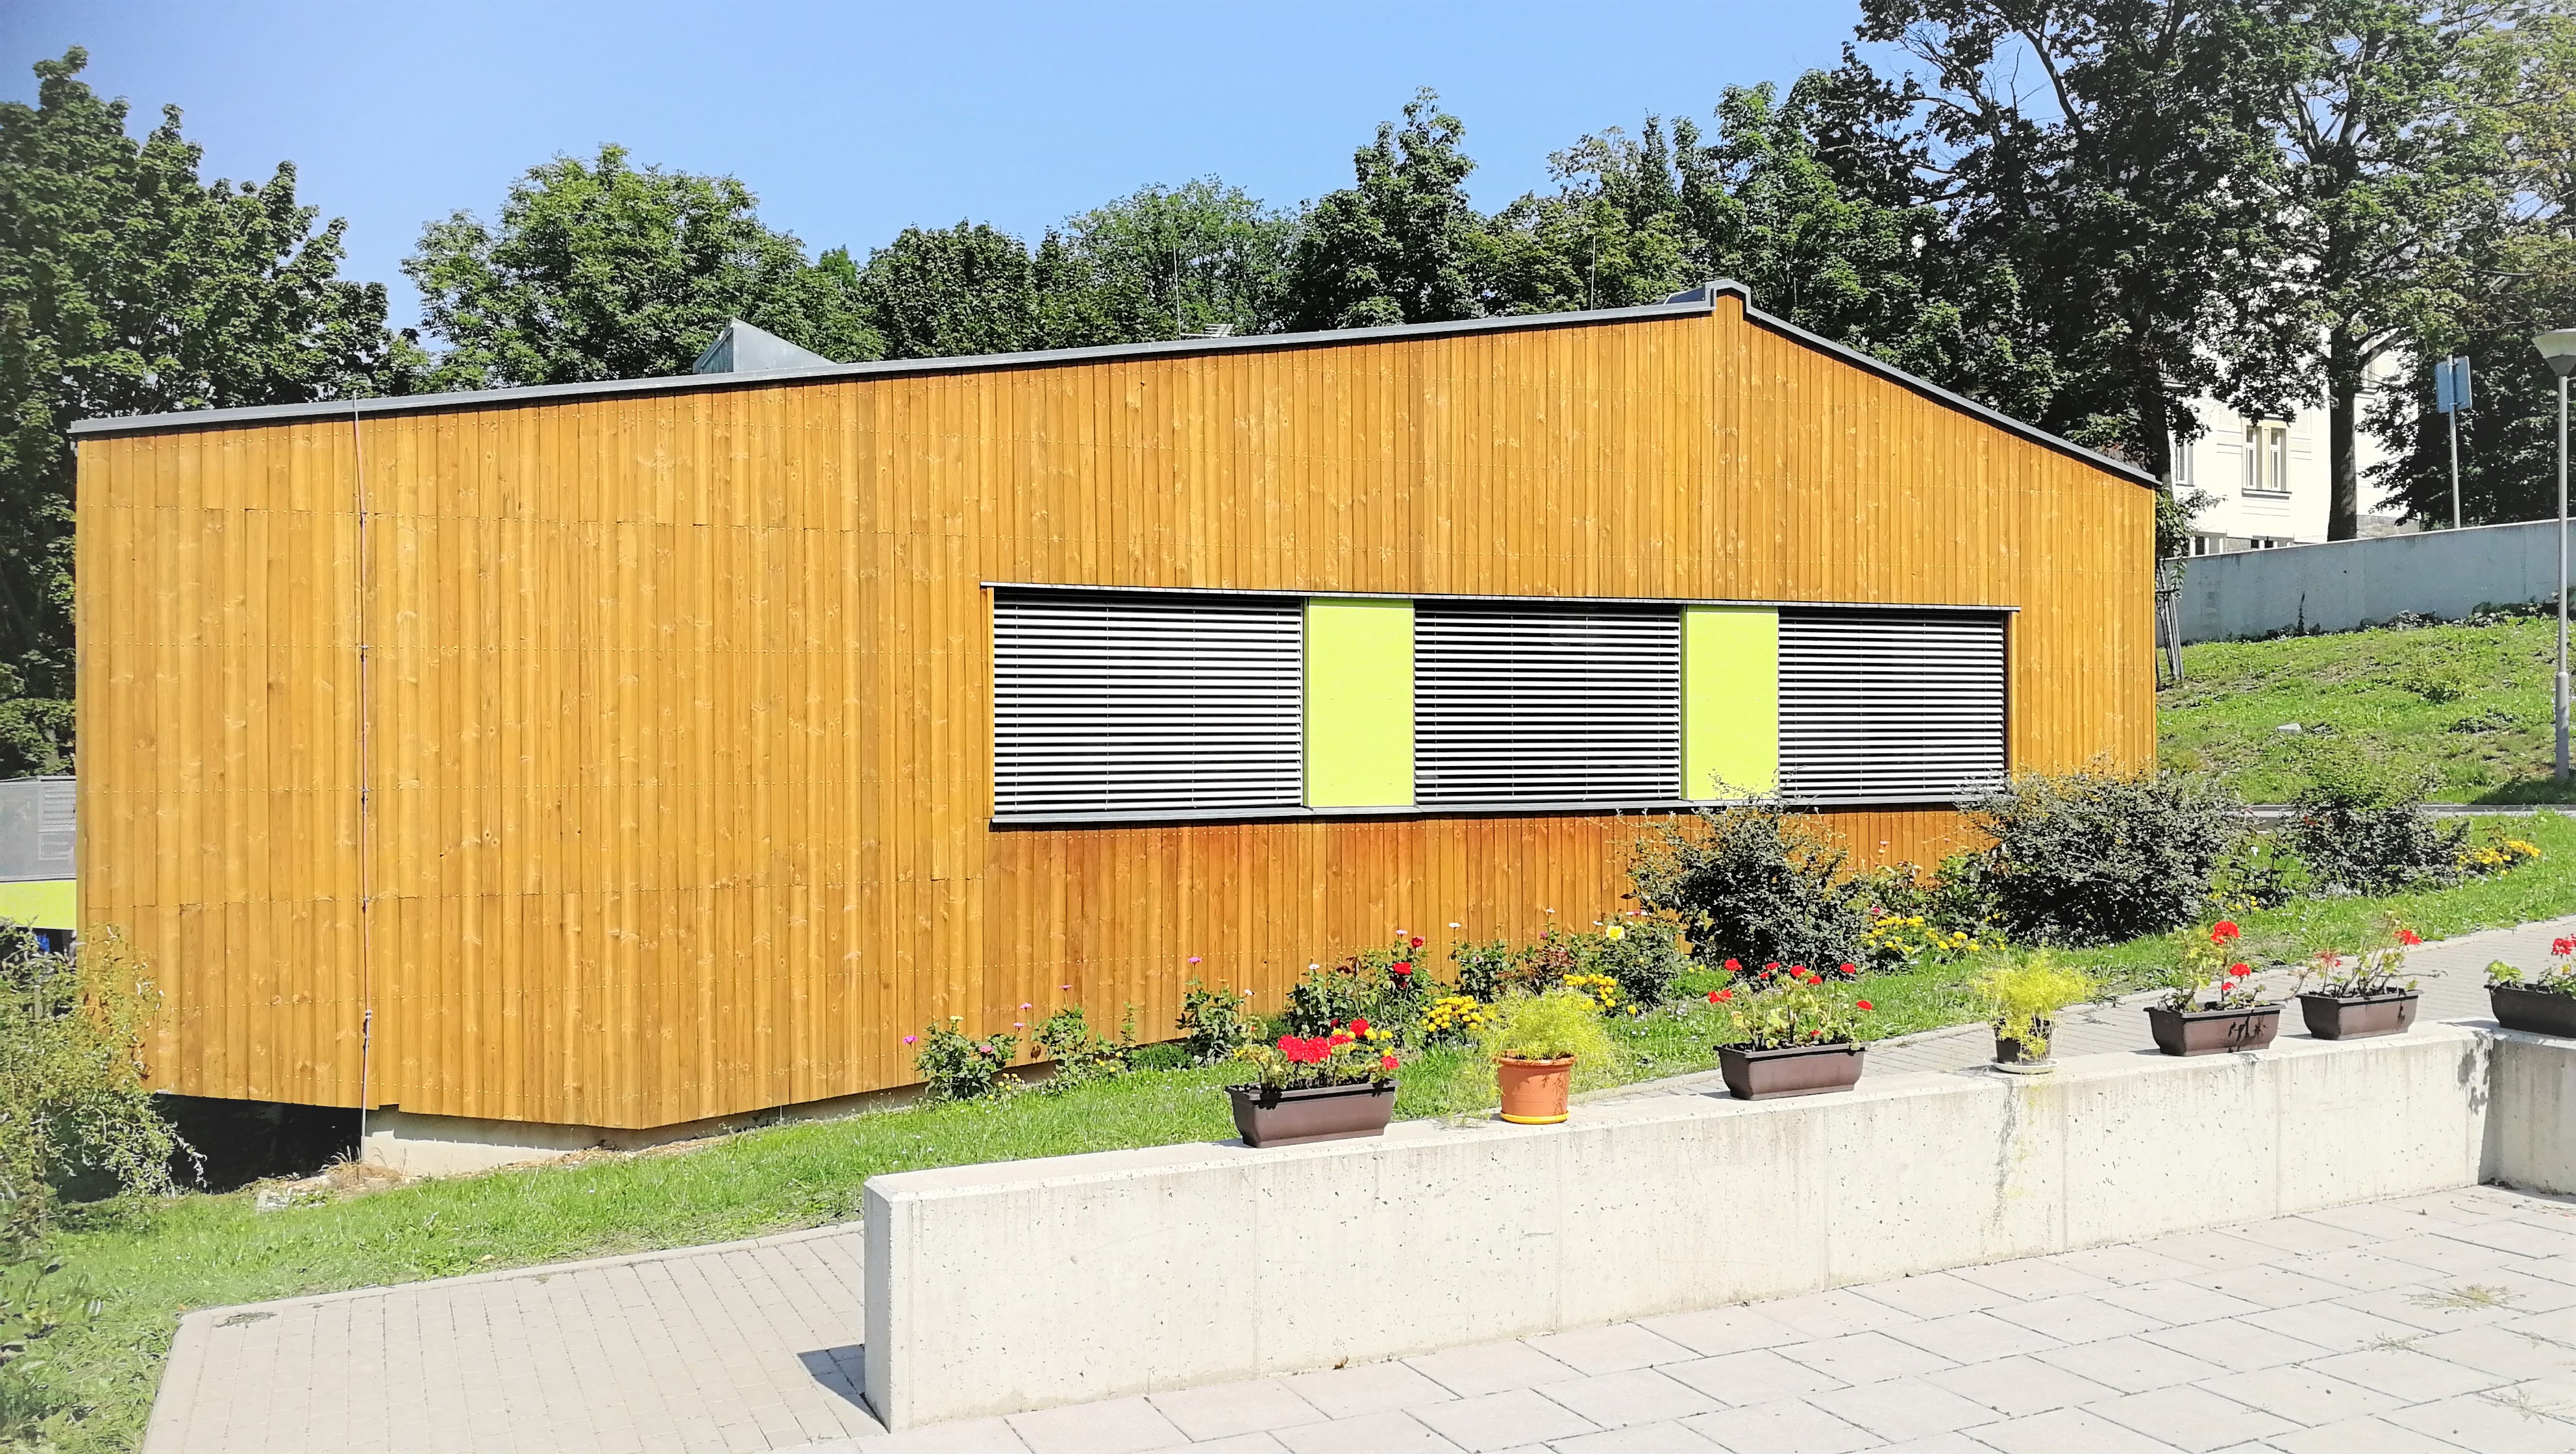 Building houses for handicapped community in Lužice, Uničov & Šternberk